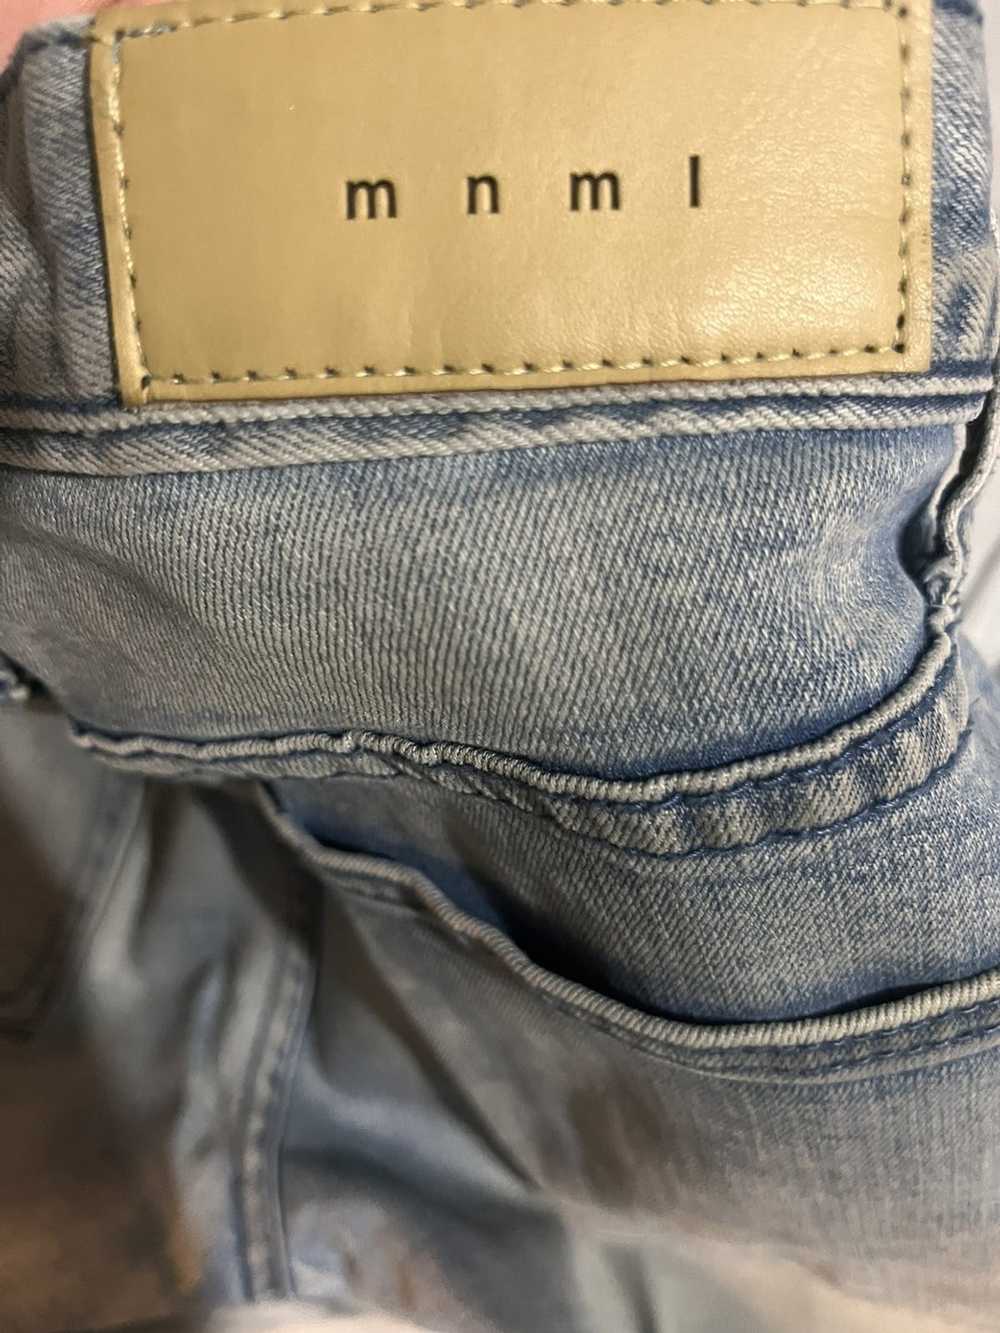 MNML Mnml Light Blue Washed Skinny Jeans - image 3